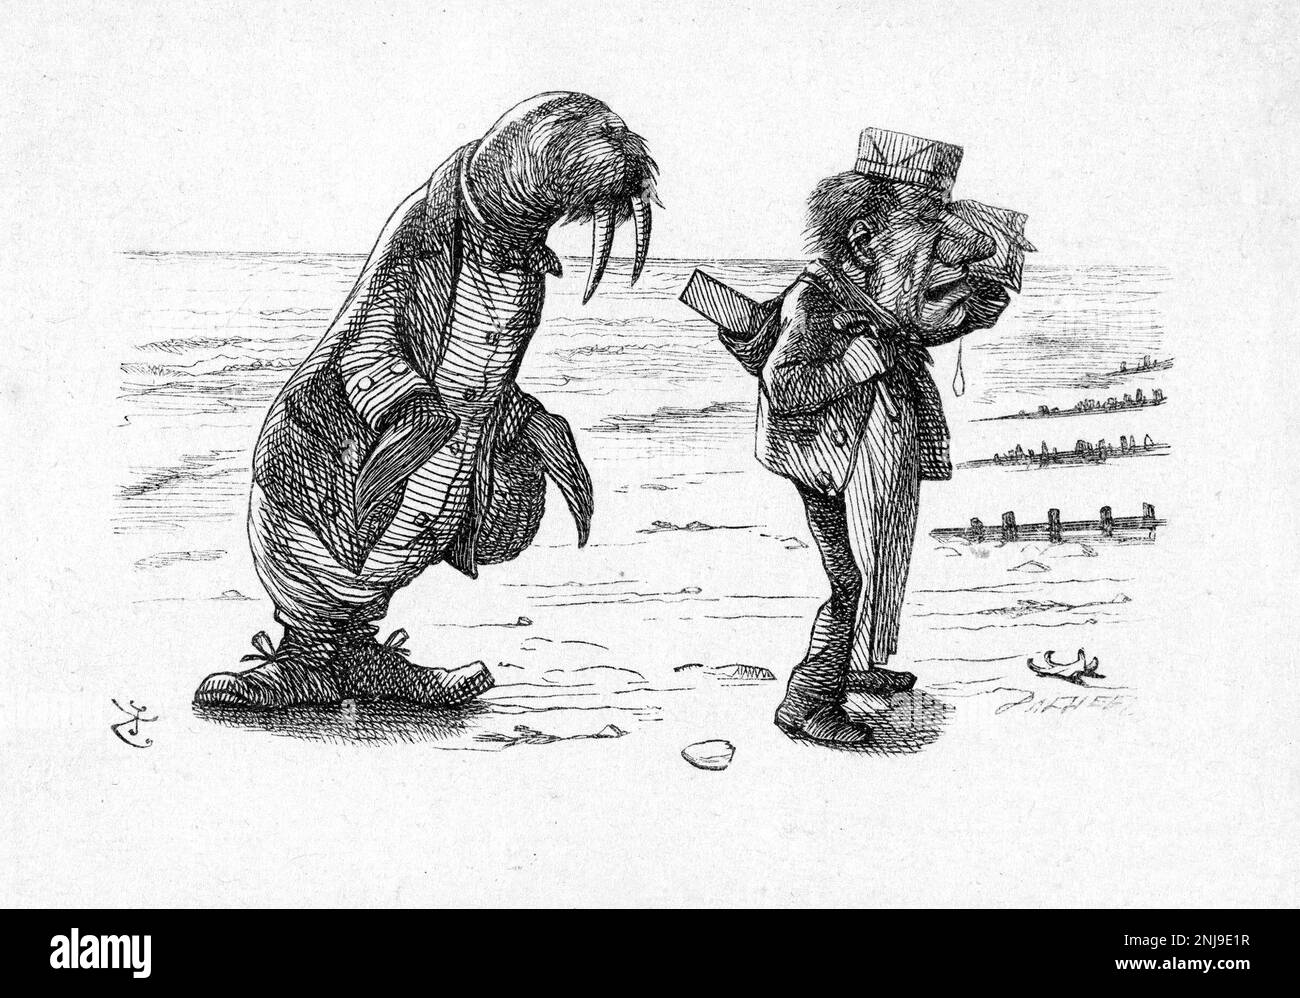 The Walrus and the Carpenter, une illustration de Sir John Tenniel pour Lewis Carroll, « Through the look-Glass, and What Alice y trouva », gravure en bois, 1872 Banque D'Images